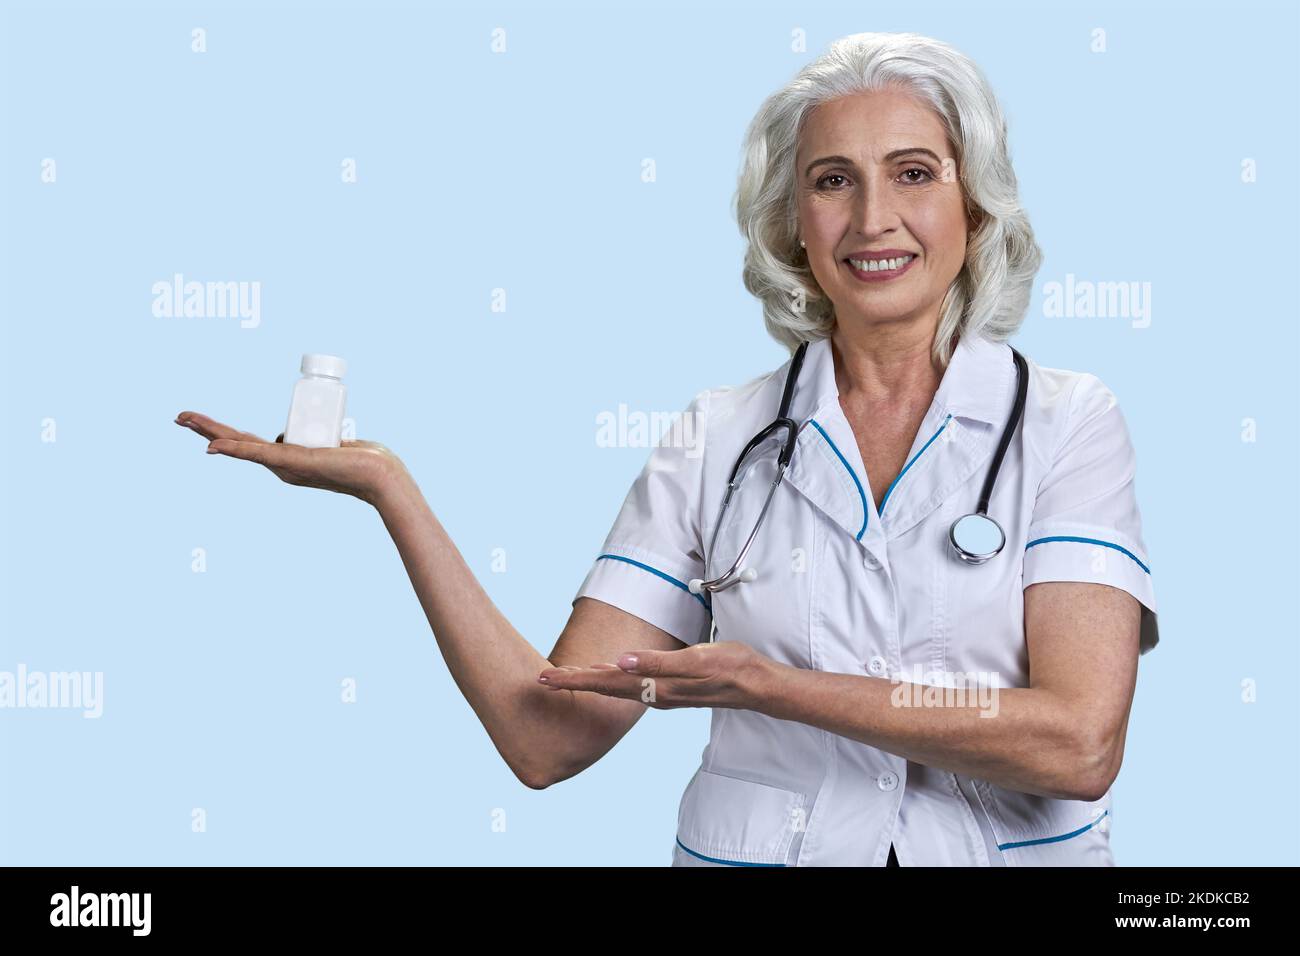 Portrait of senior aged woman advertising white medicine bottle. Gray-haired lady on blue background. Stock Photo